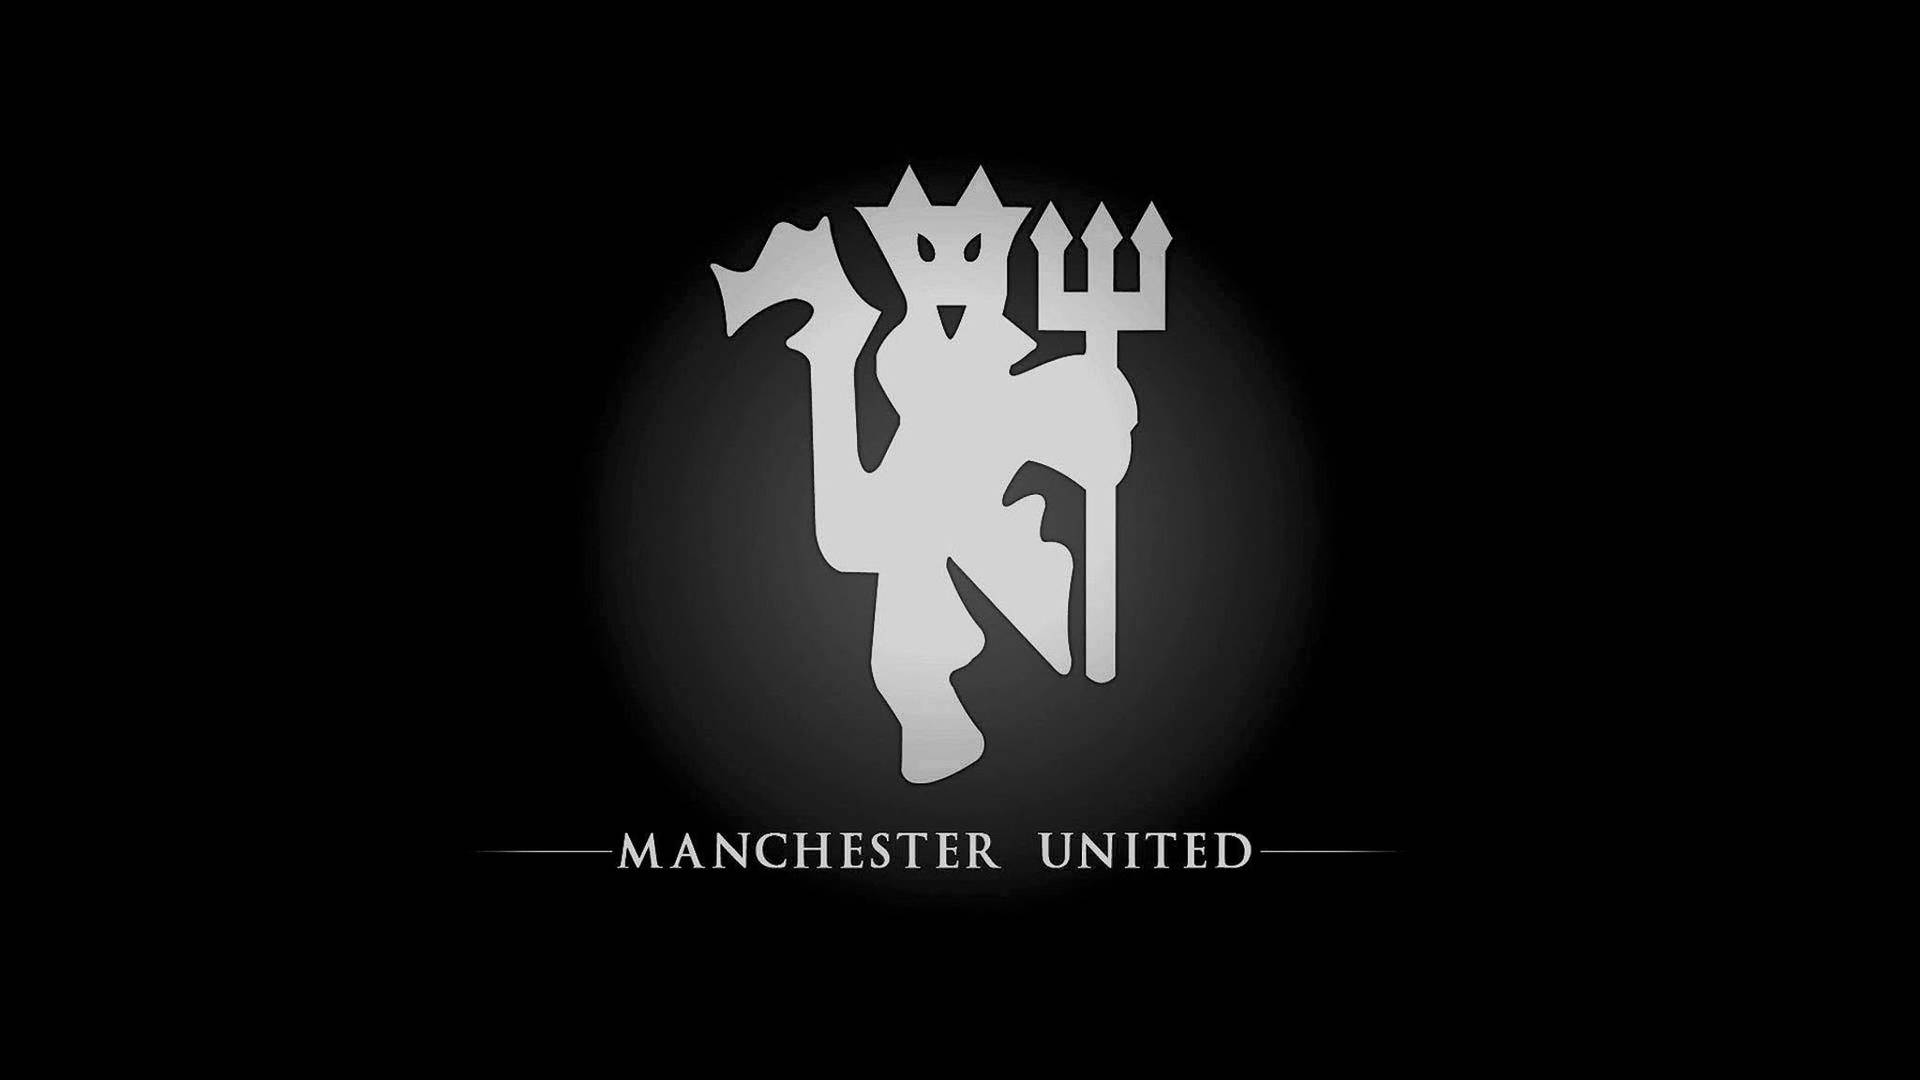 Black And White Manchester United Wallpaper